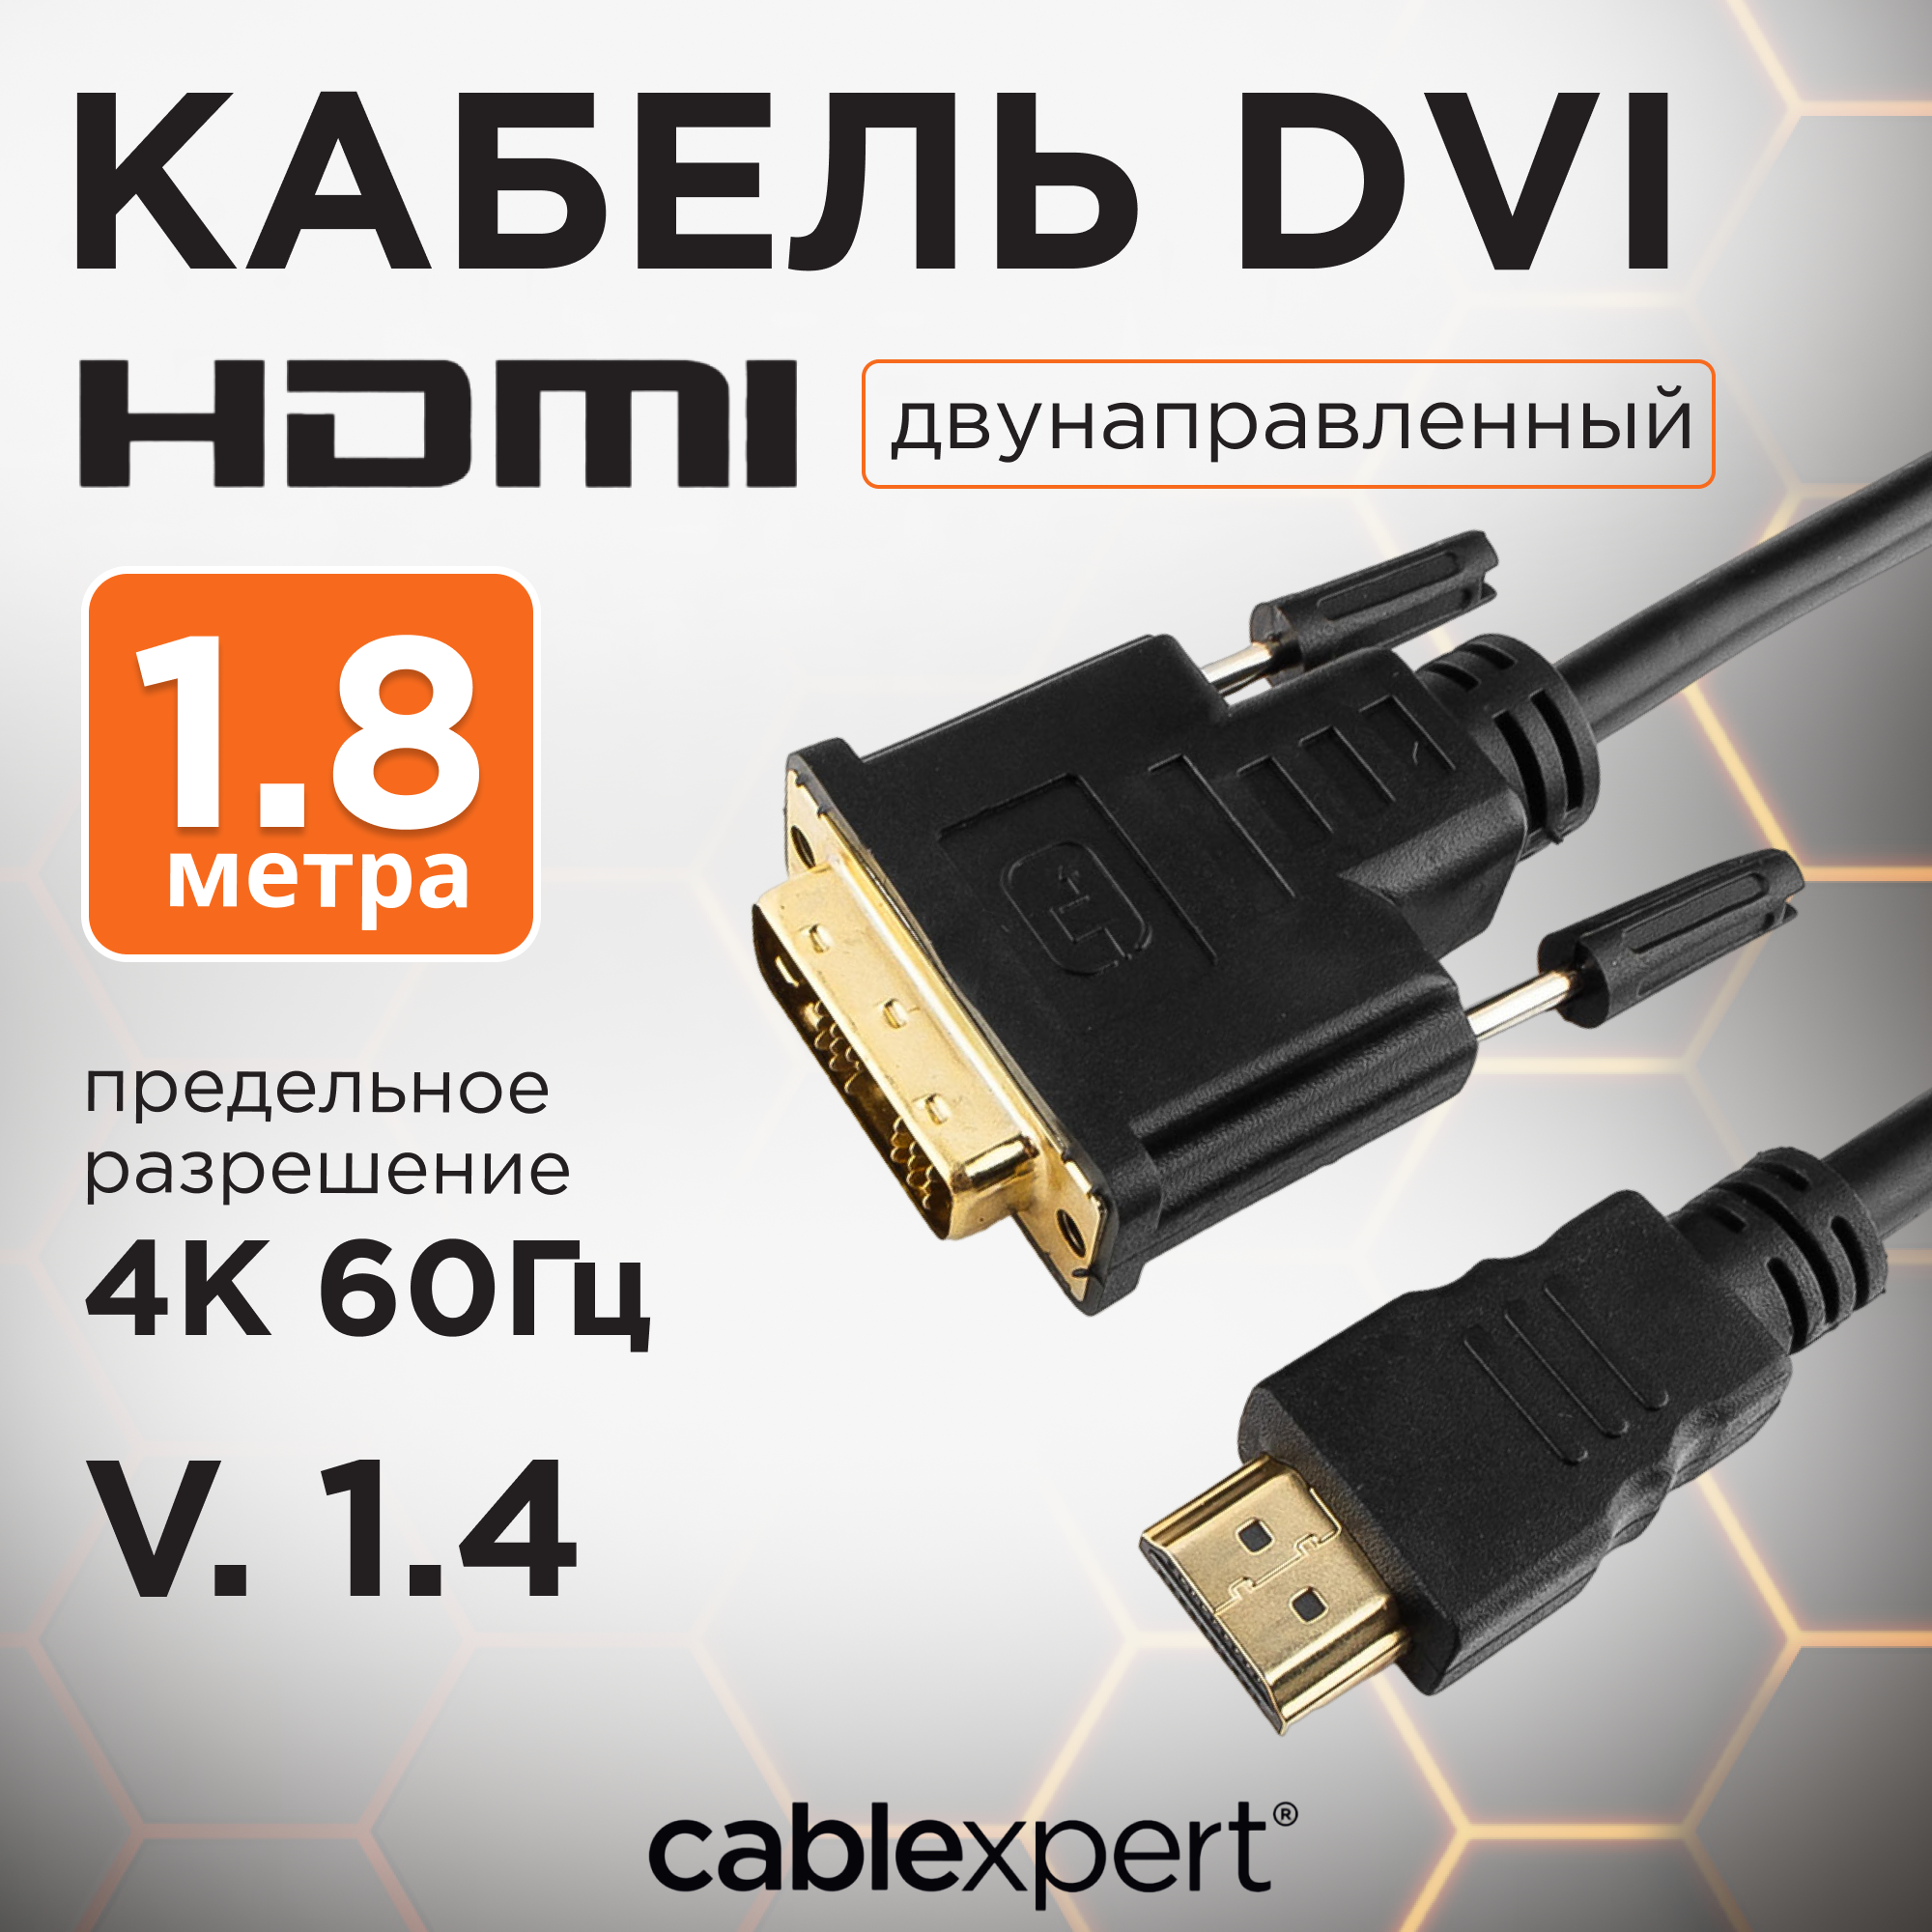 Кабель видео адаптер HDMI-DVI single link Cablexpert CC-HDMI-DVI-6 - 1.8 метра